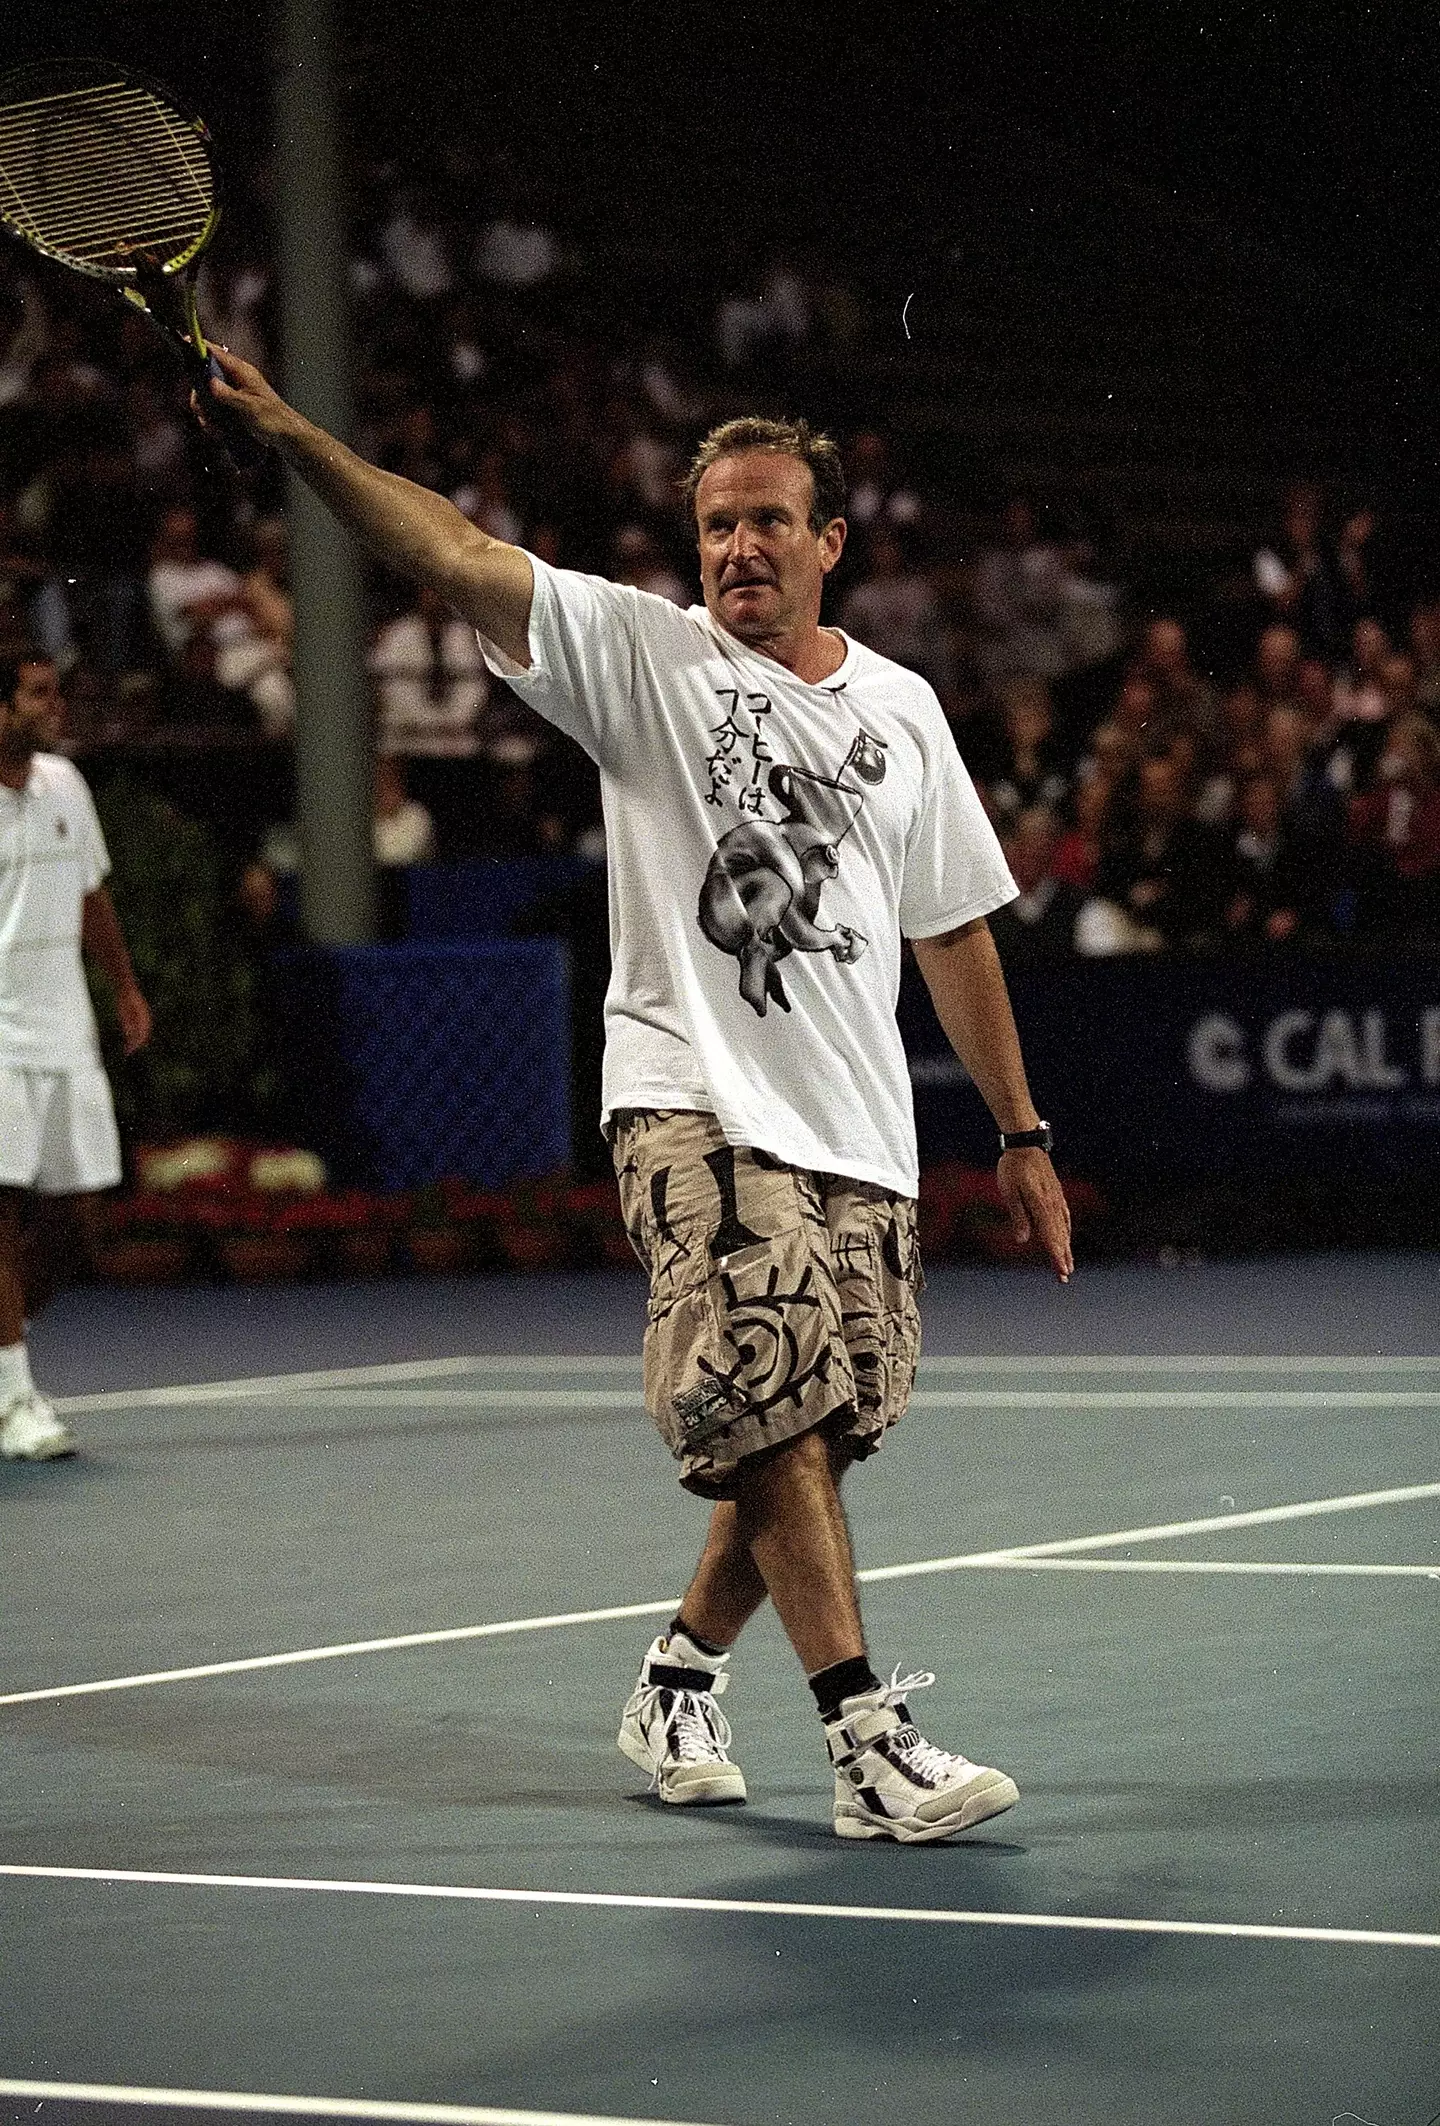 Williams had taken part in a celebrity tennis match in 1999.